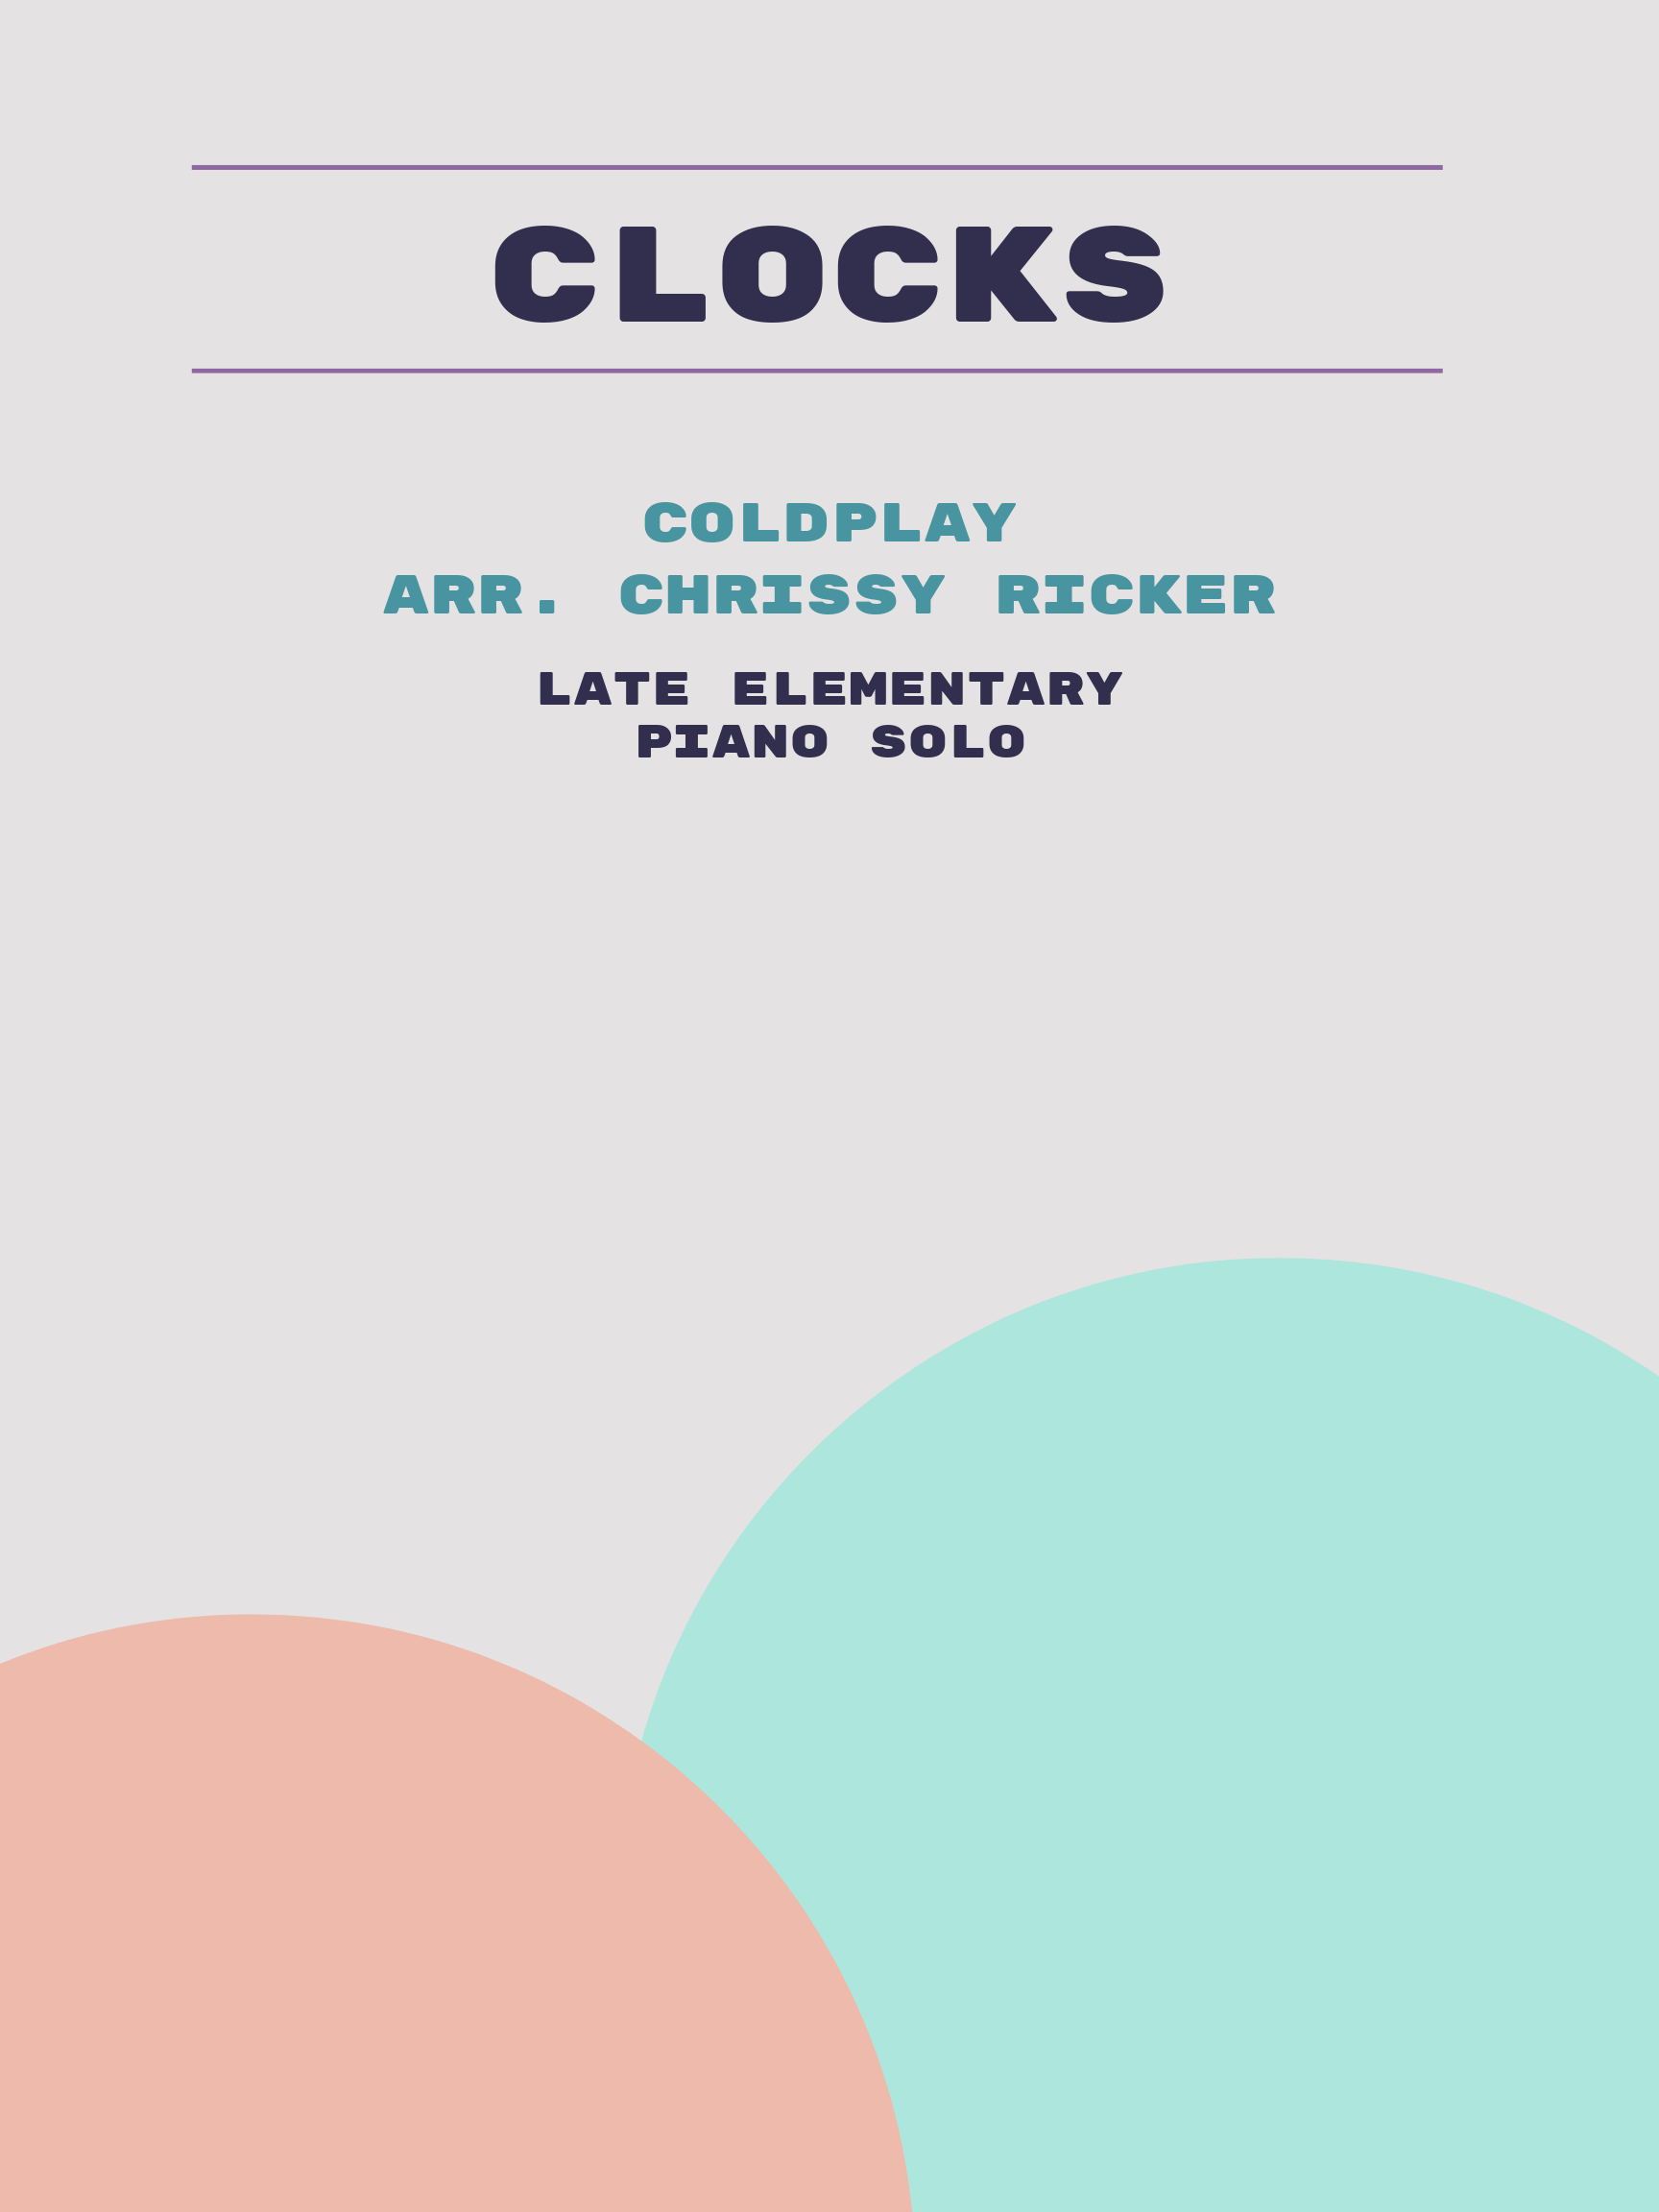 Clocks by Coldplay